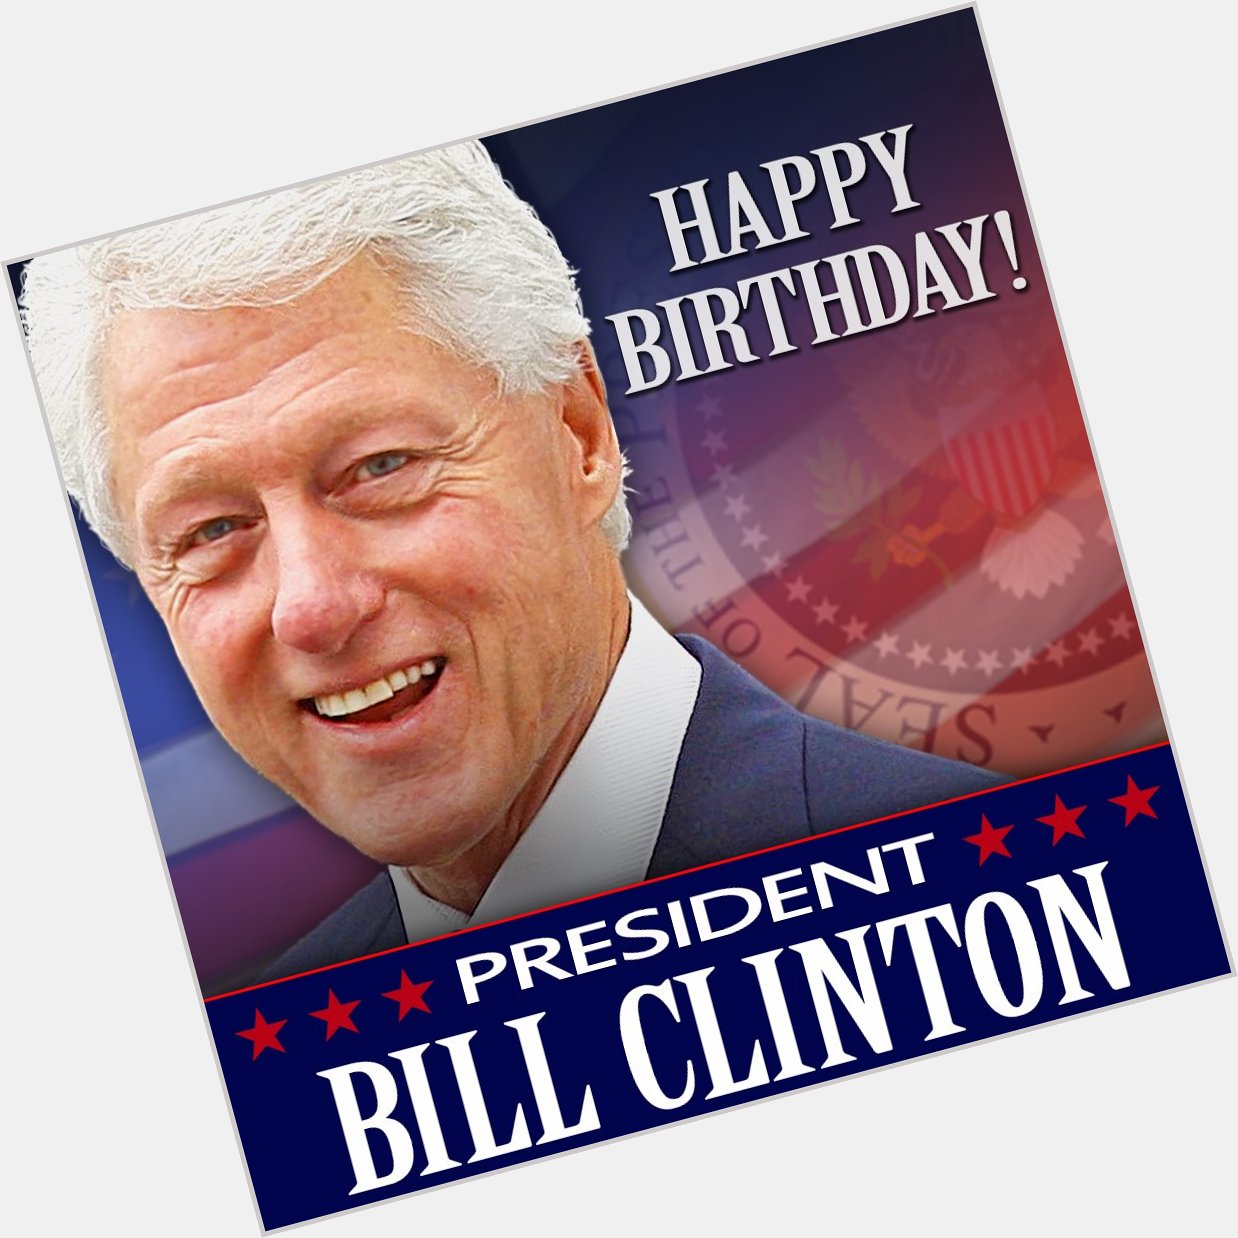 HAPPY BIRTHDAY! Former President Bill Clinton turns 73 today.   